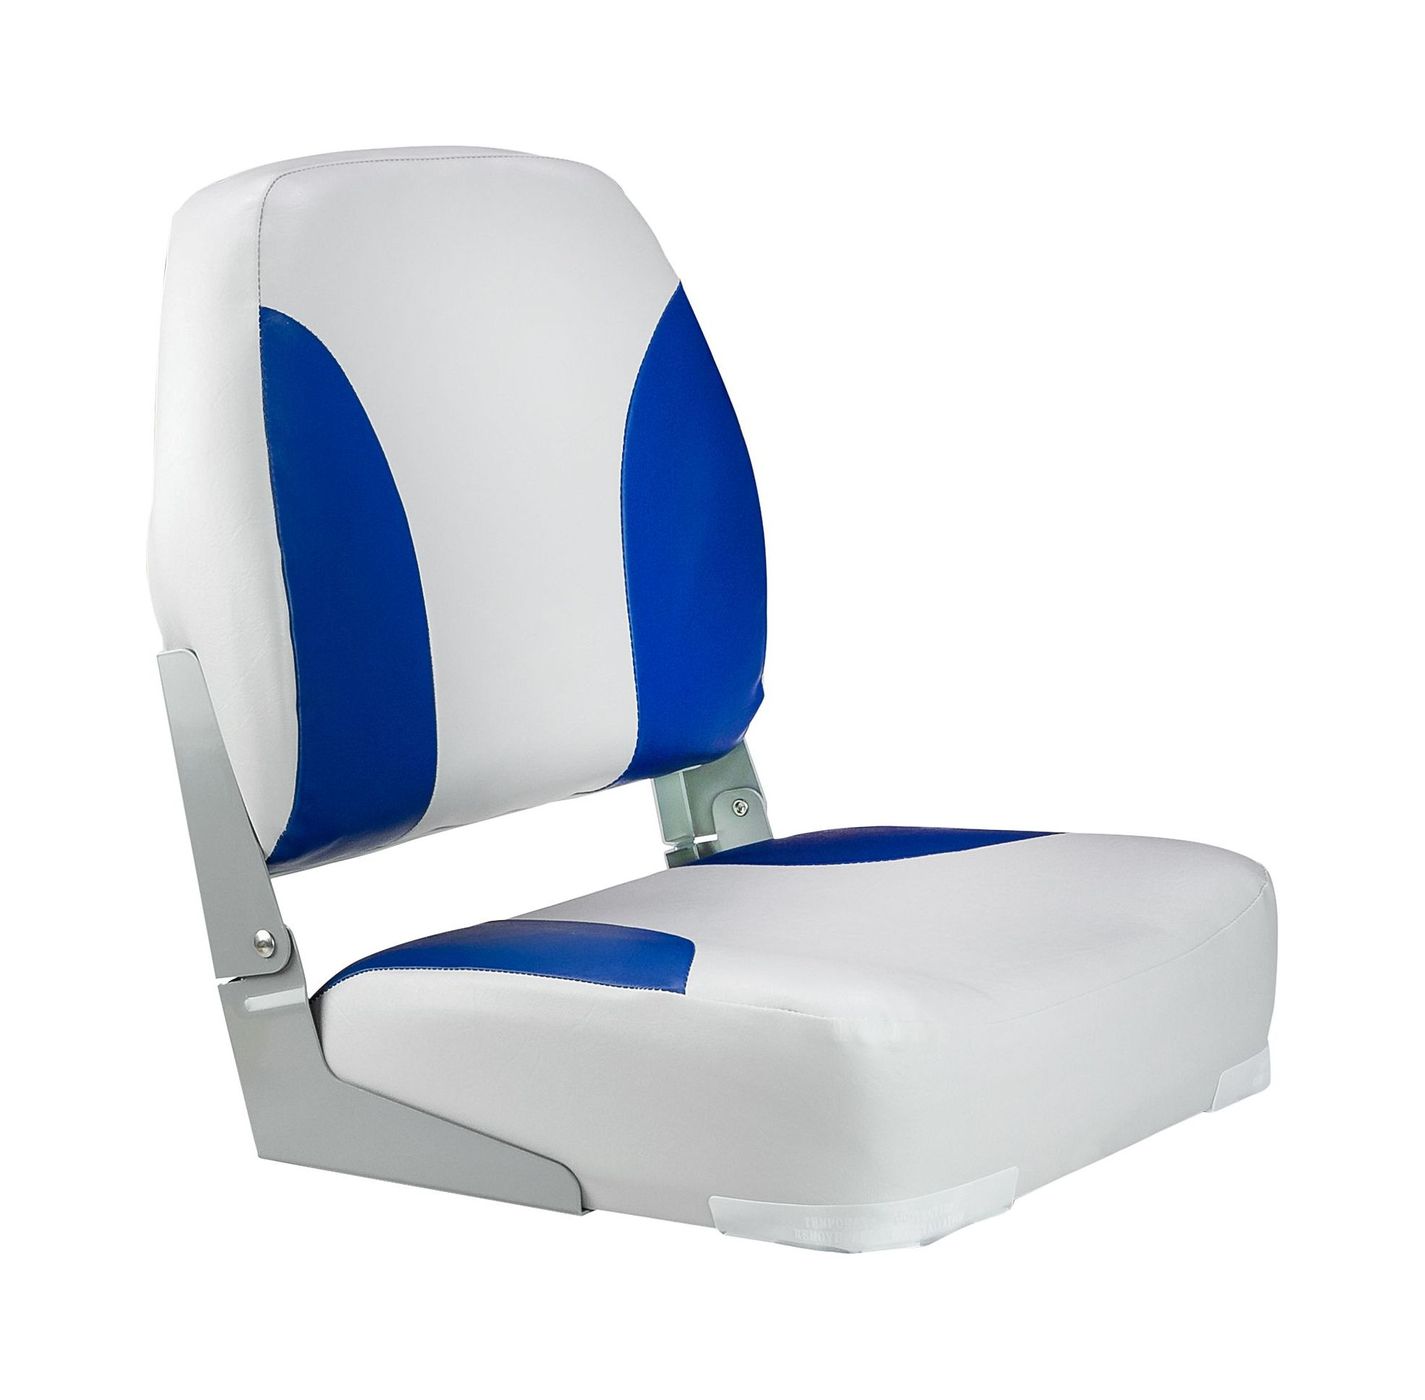 Кресло мягкое складное Classic, обивка винил, цвет серый/синий, Marine Rocket 75102GB-MR сиденье мягкое pro casting обивка синий винил 75104b